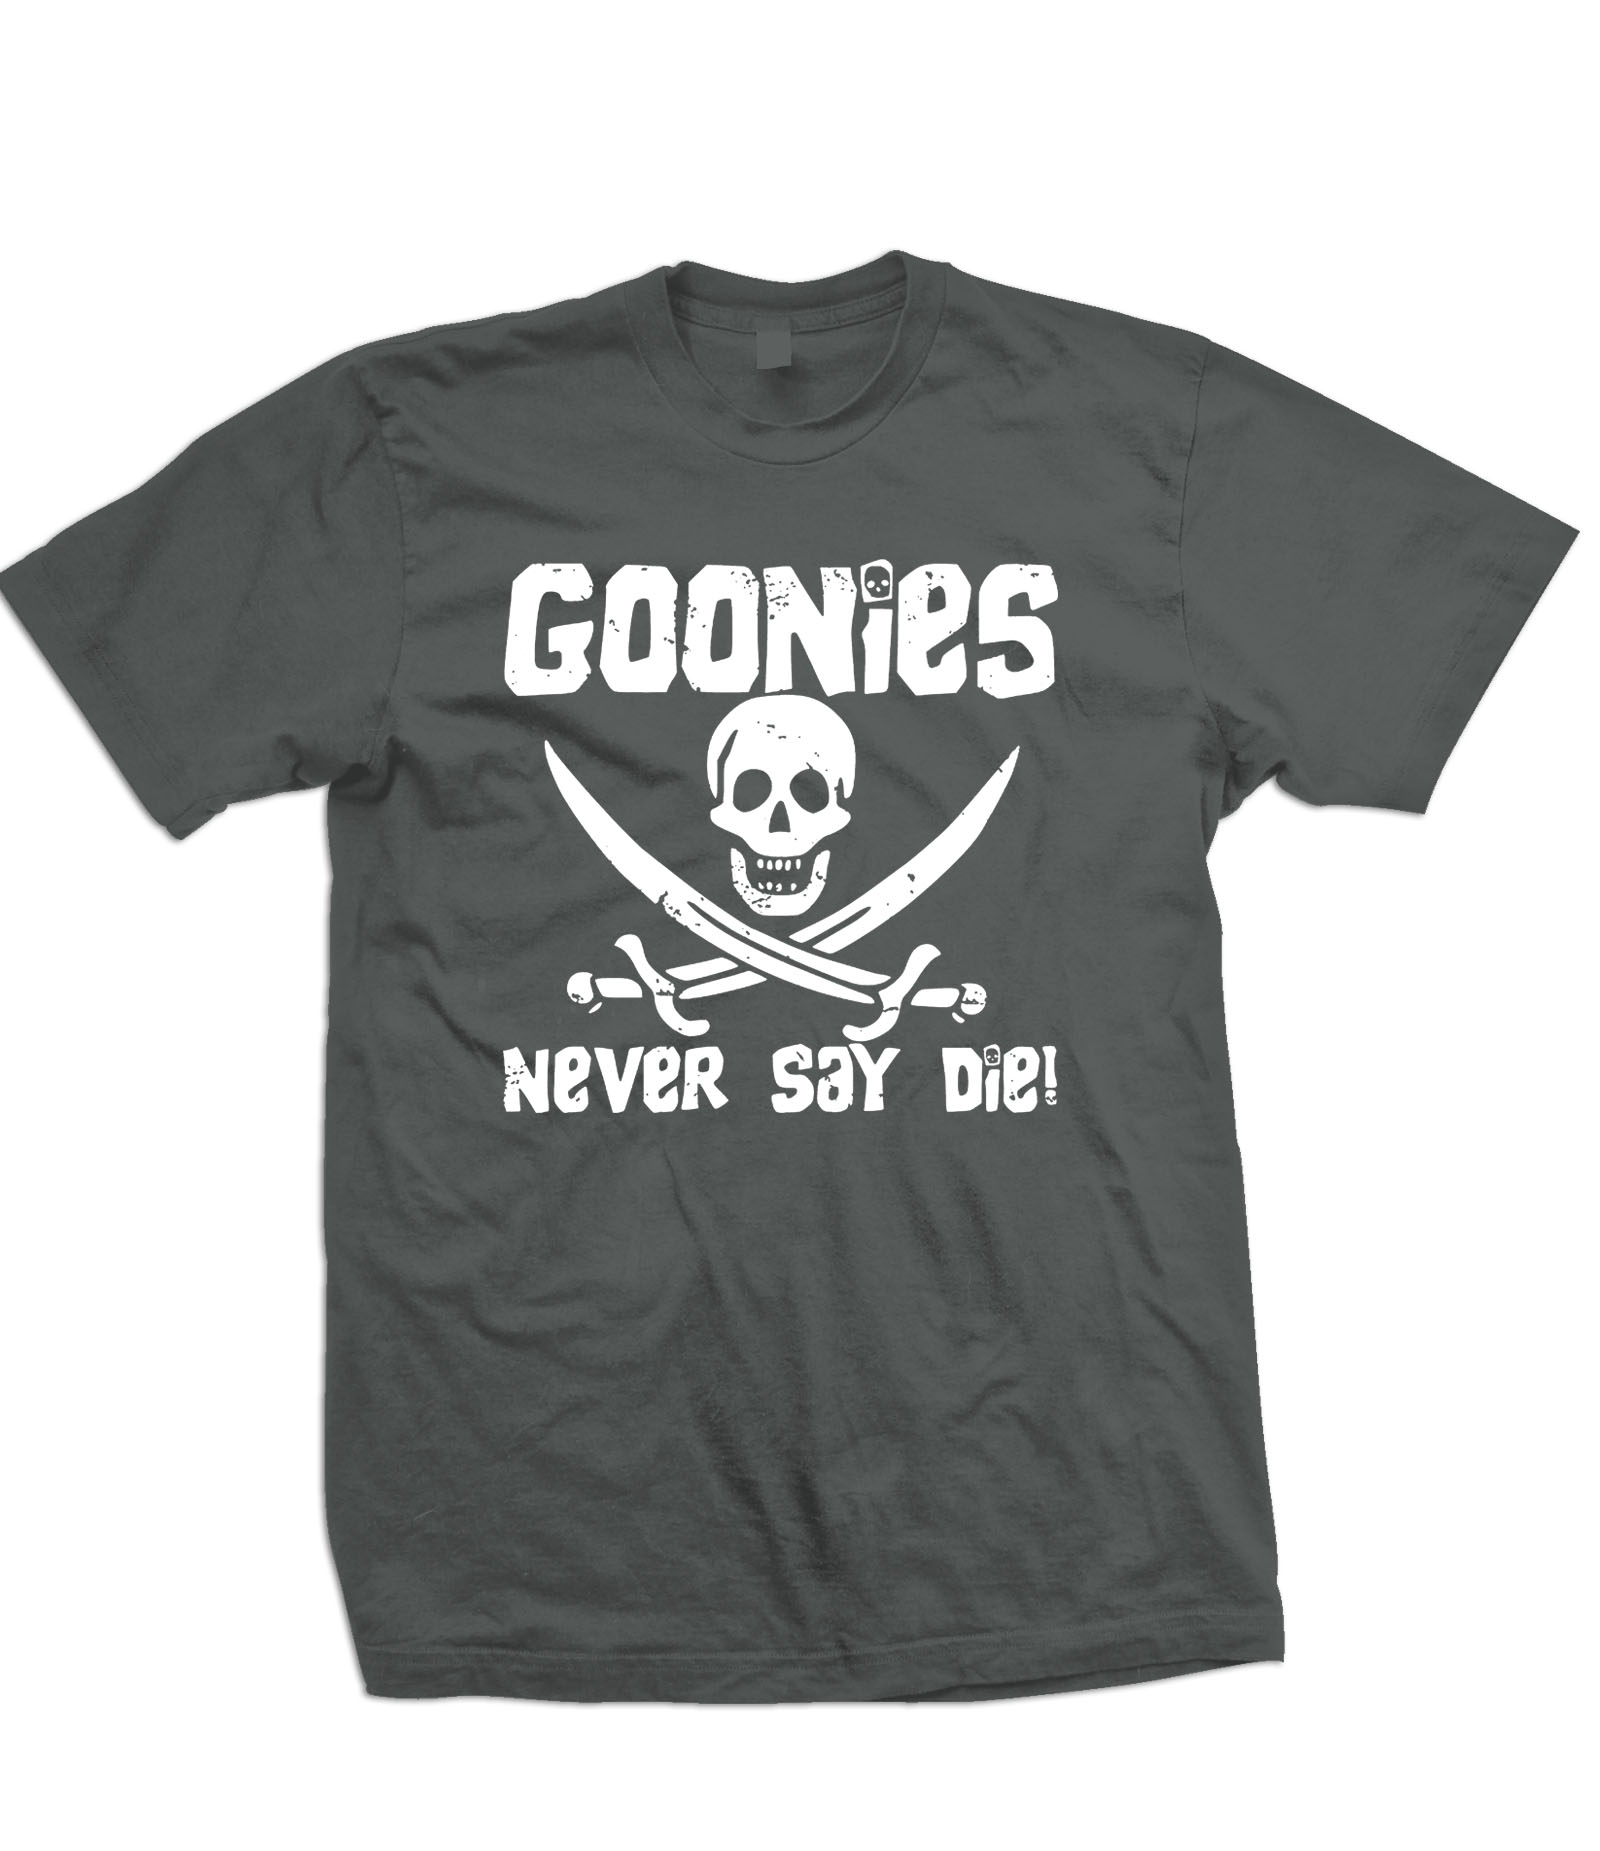 The Goonies Mercancía con Licencia Oficial Never Say Die T-Shirt Negro 